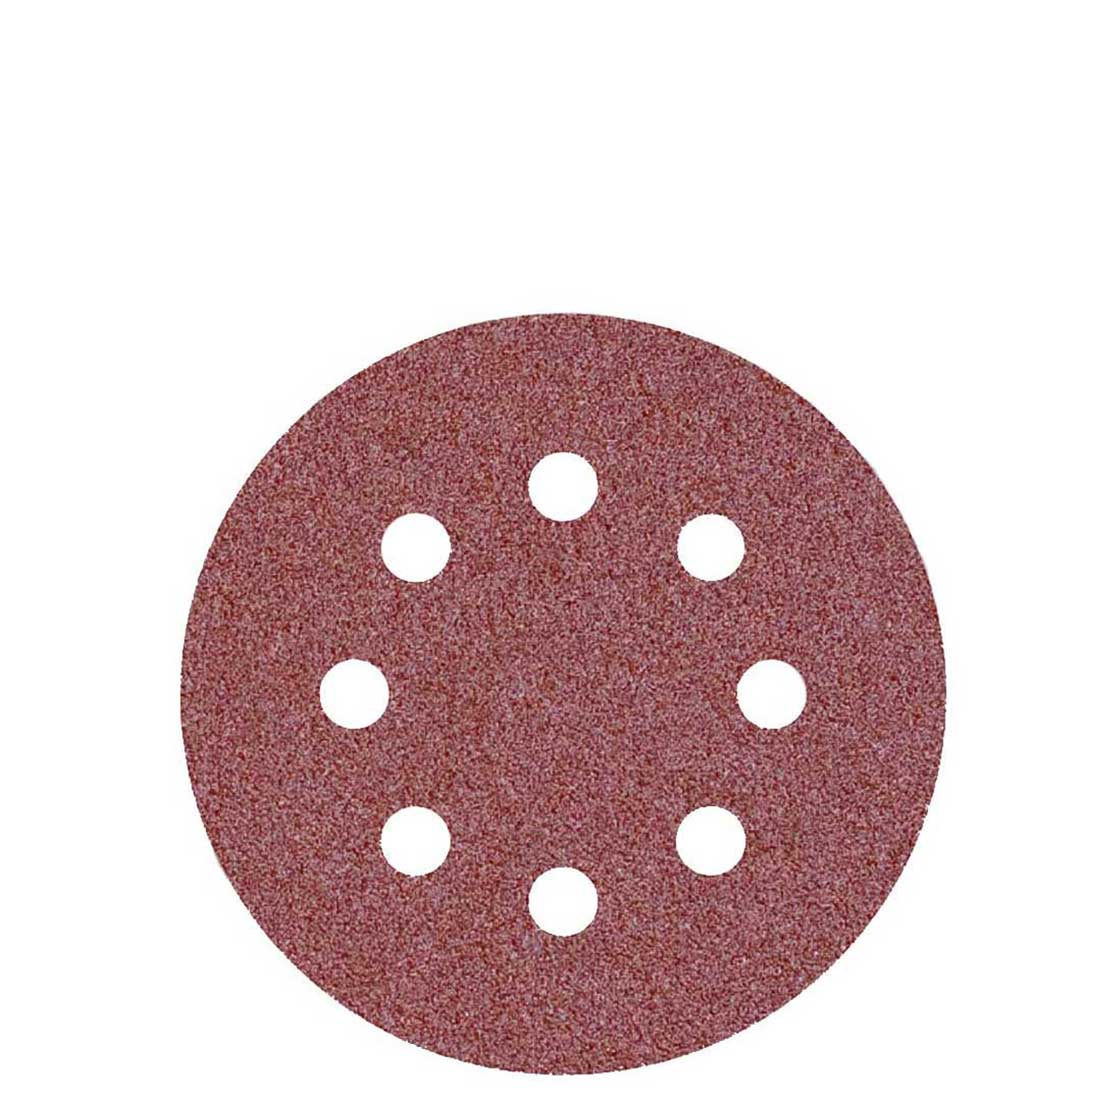 MioTools hook & loop sanding discs for random orbital sanders, G24–240, Ø 115 mm / 8 hole / aluminium oxide